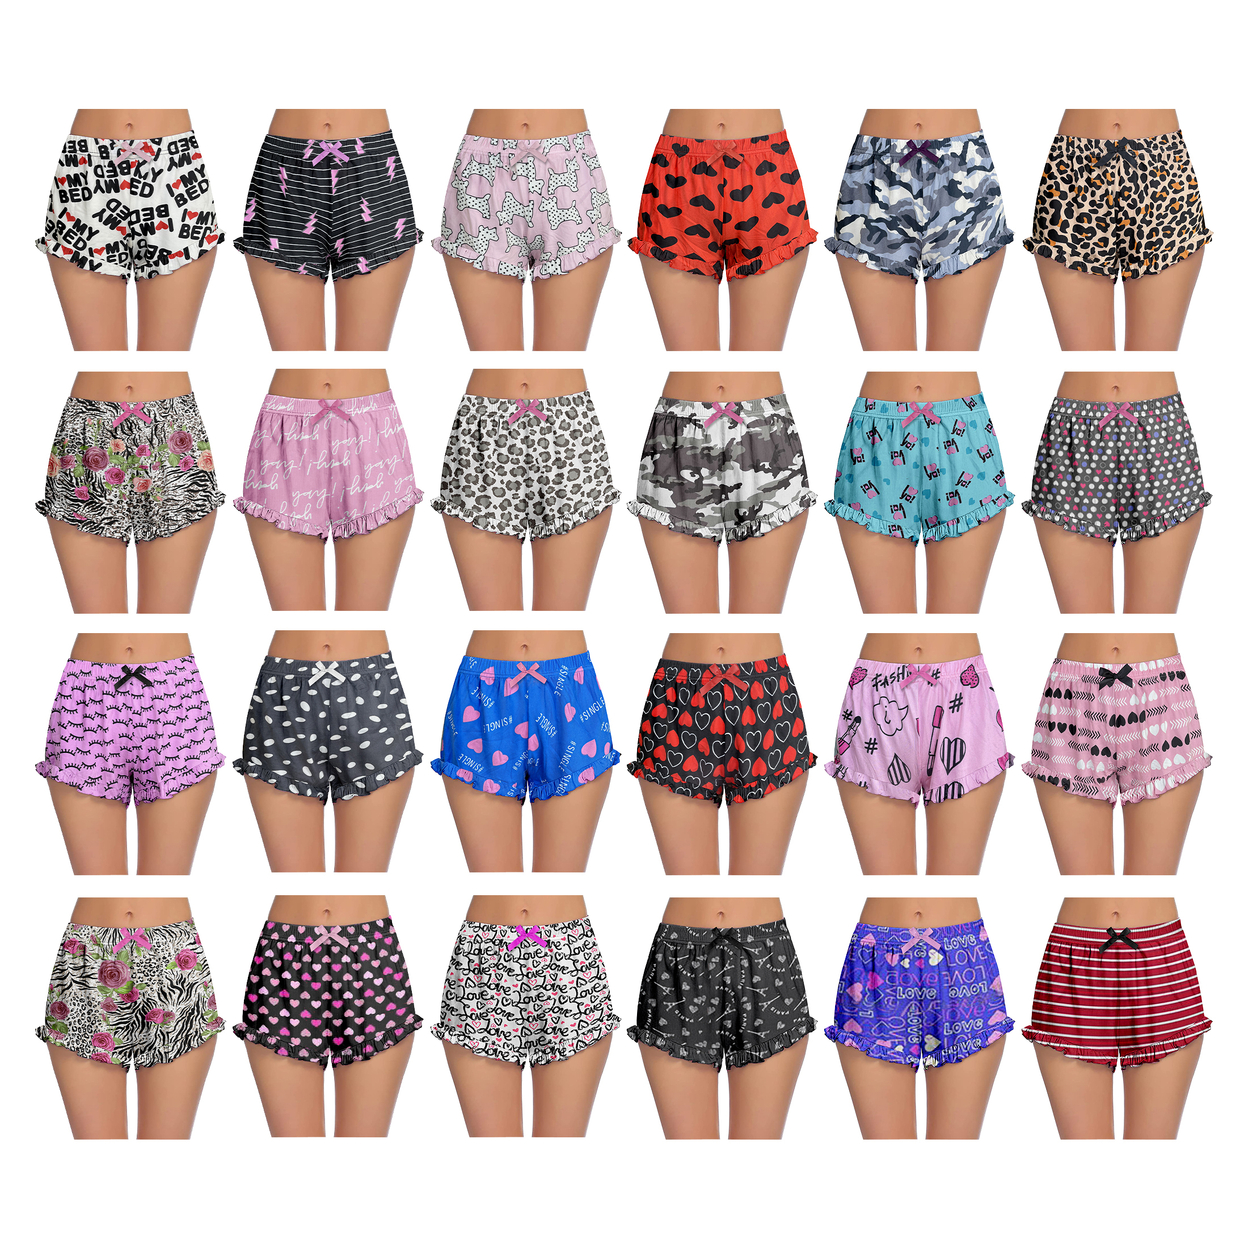 3-Pack: Women's Ultra Soft Cozy Fun Print Ruffled Hem Sleep Lounge Pajama Shorts - Large, Shapes